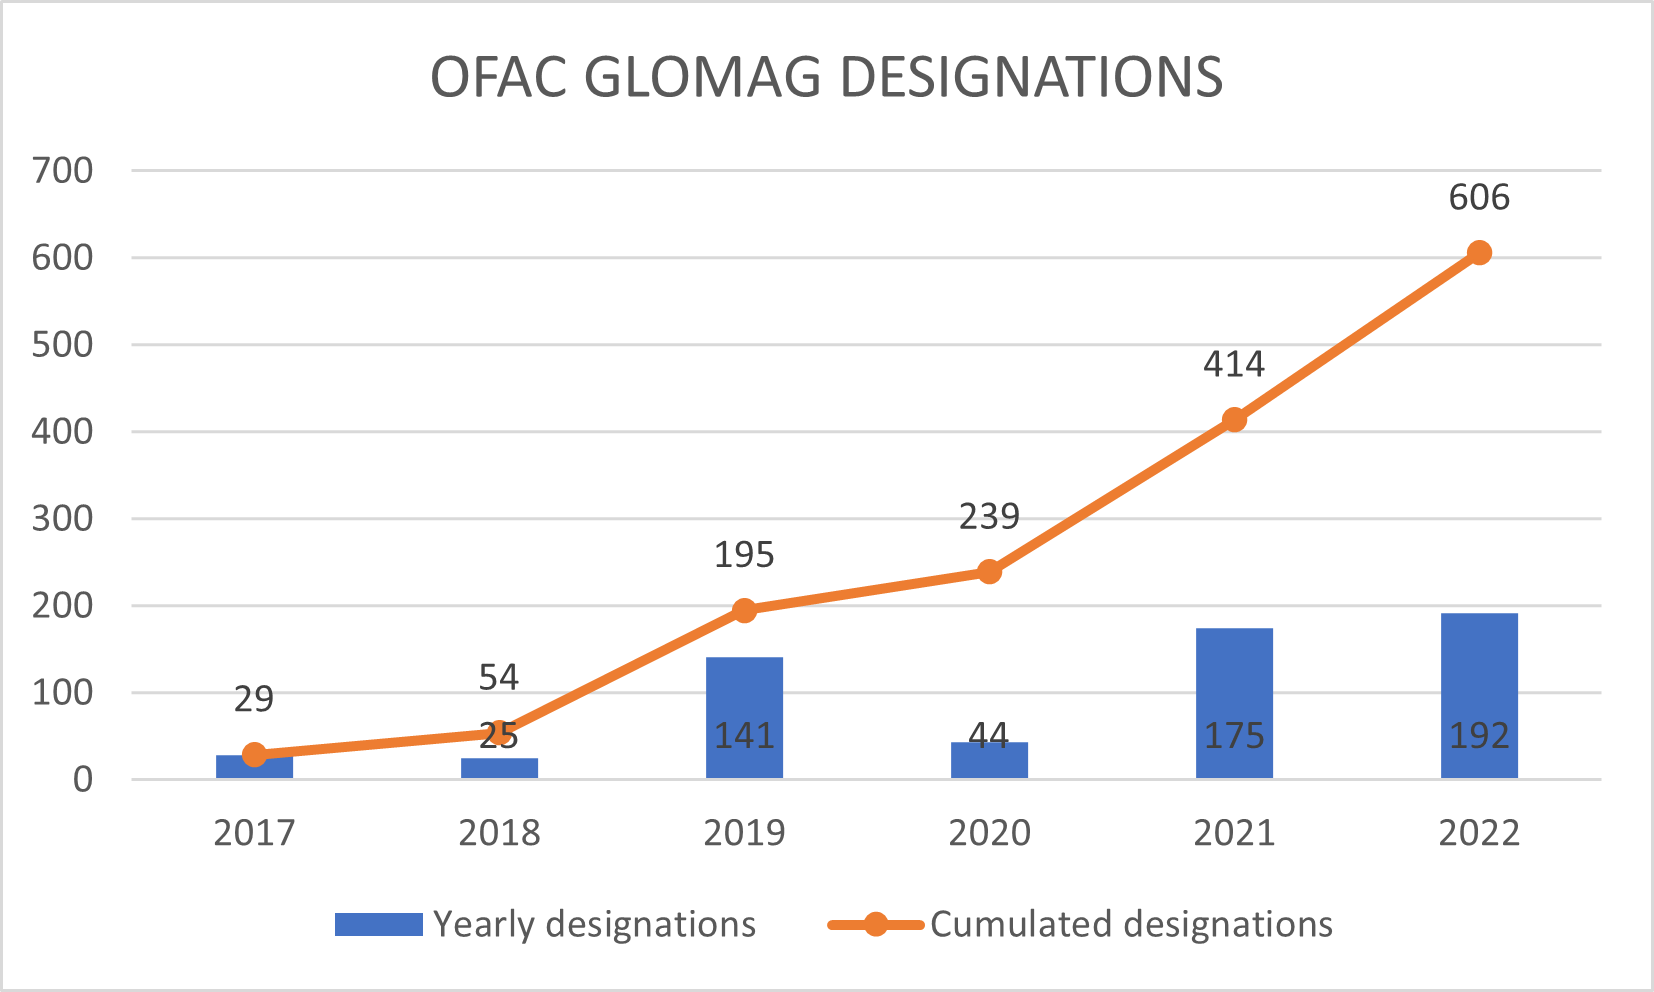 OFAC GLOMAC Designations